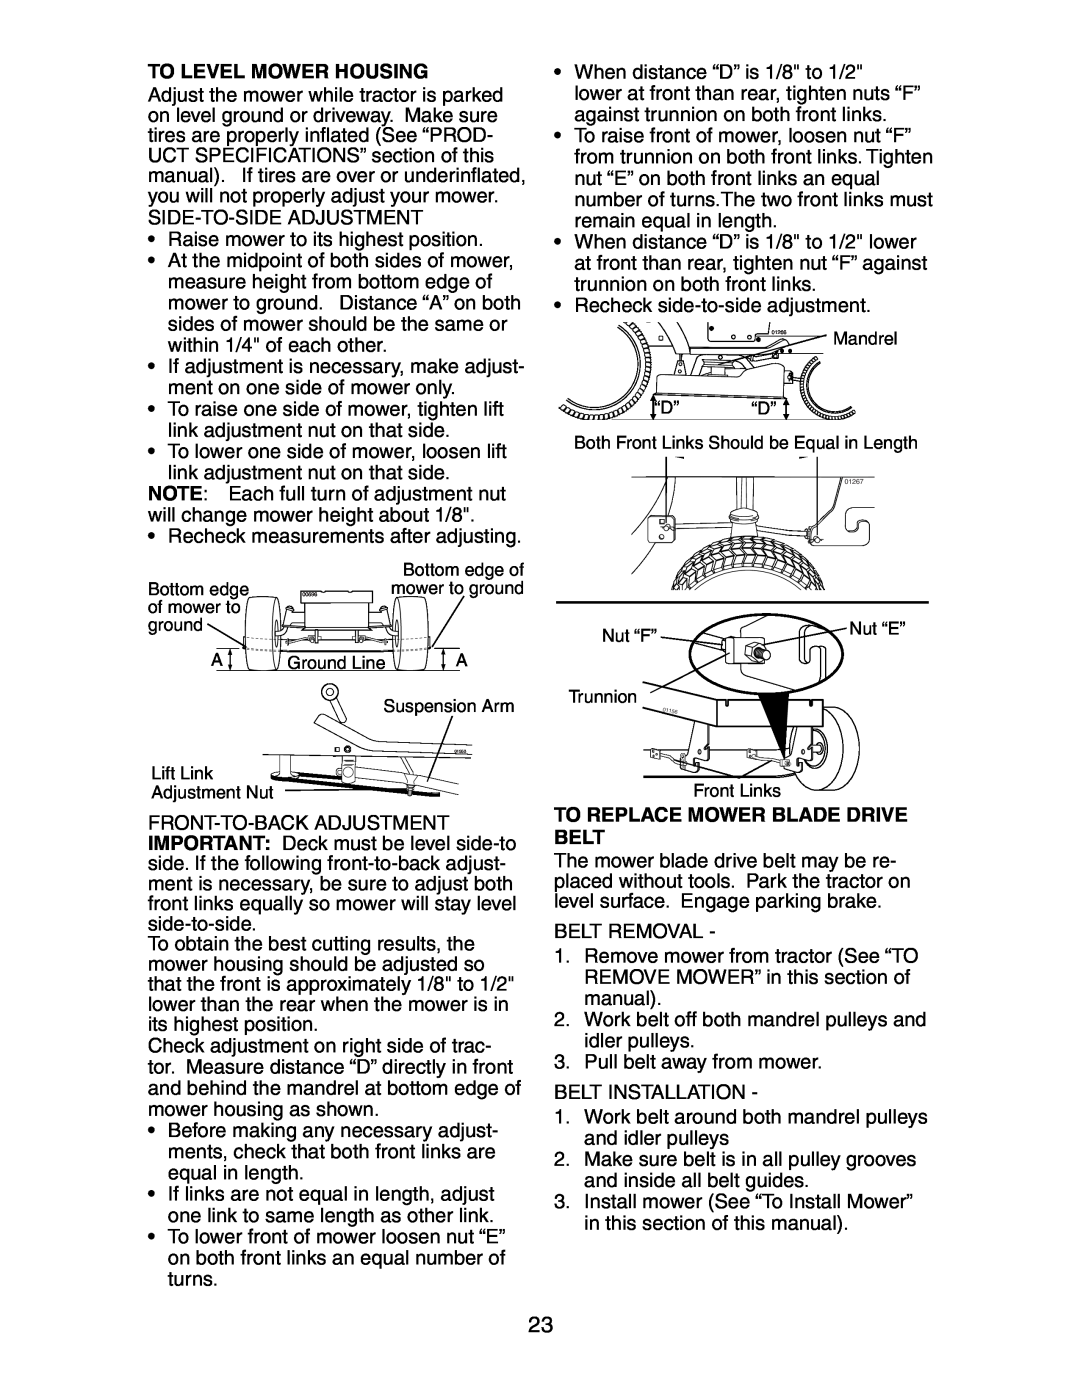 Poulan 191663 manual To Level Mower Housing, To Replace Mower Blade Drive Belt 